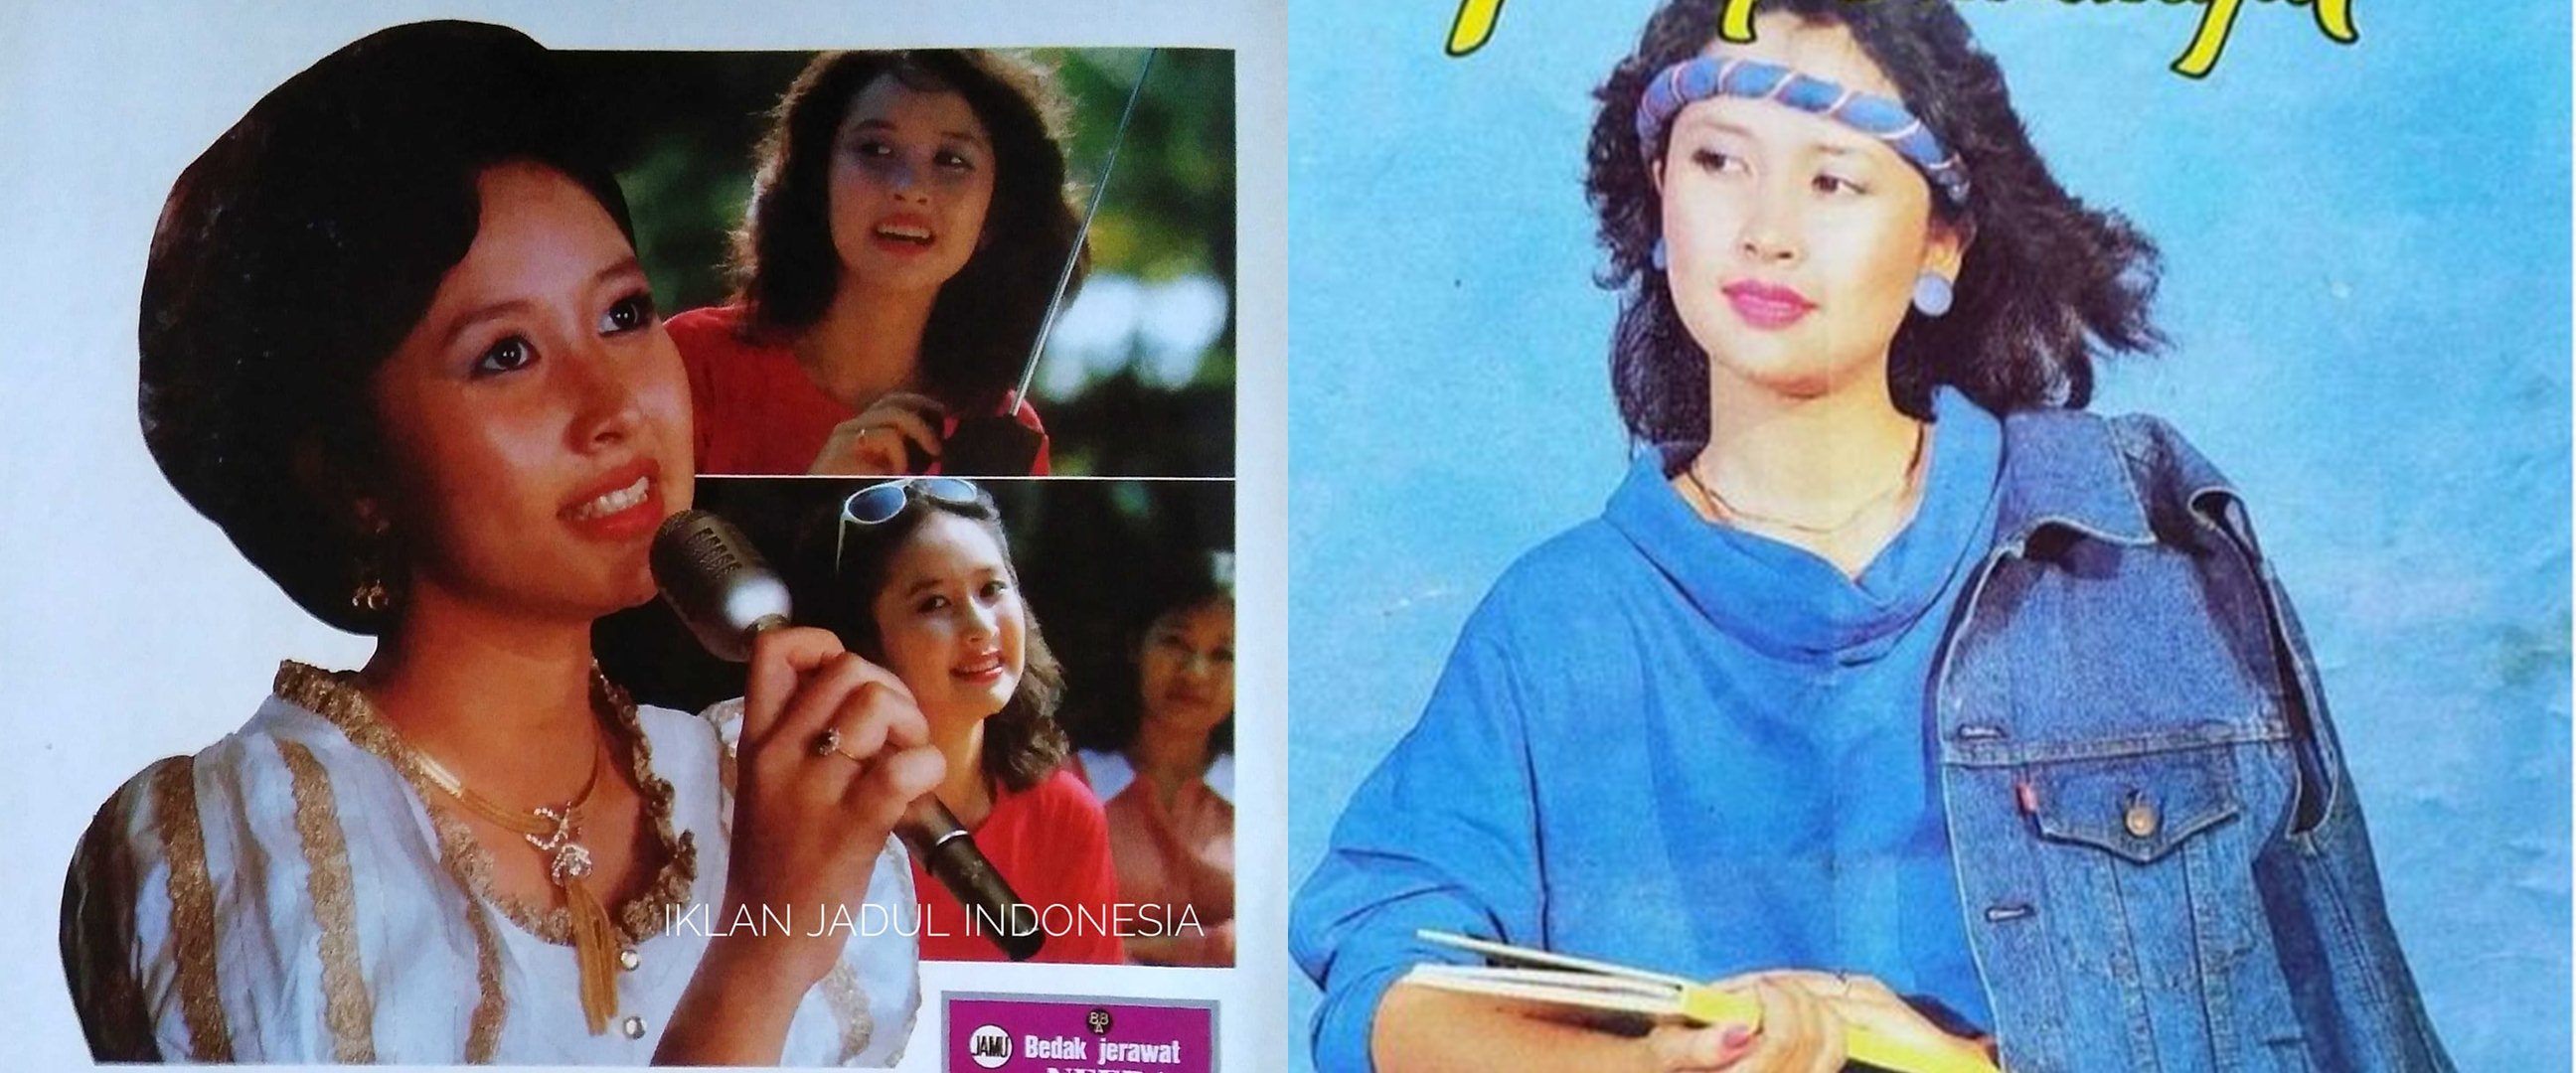 Gadis di iklan bedak jerawat era 80-an ini pernah jadi juri Idola Cilik, intip 9 transformasinya